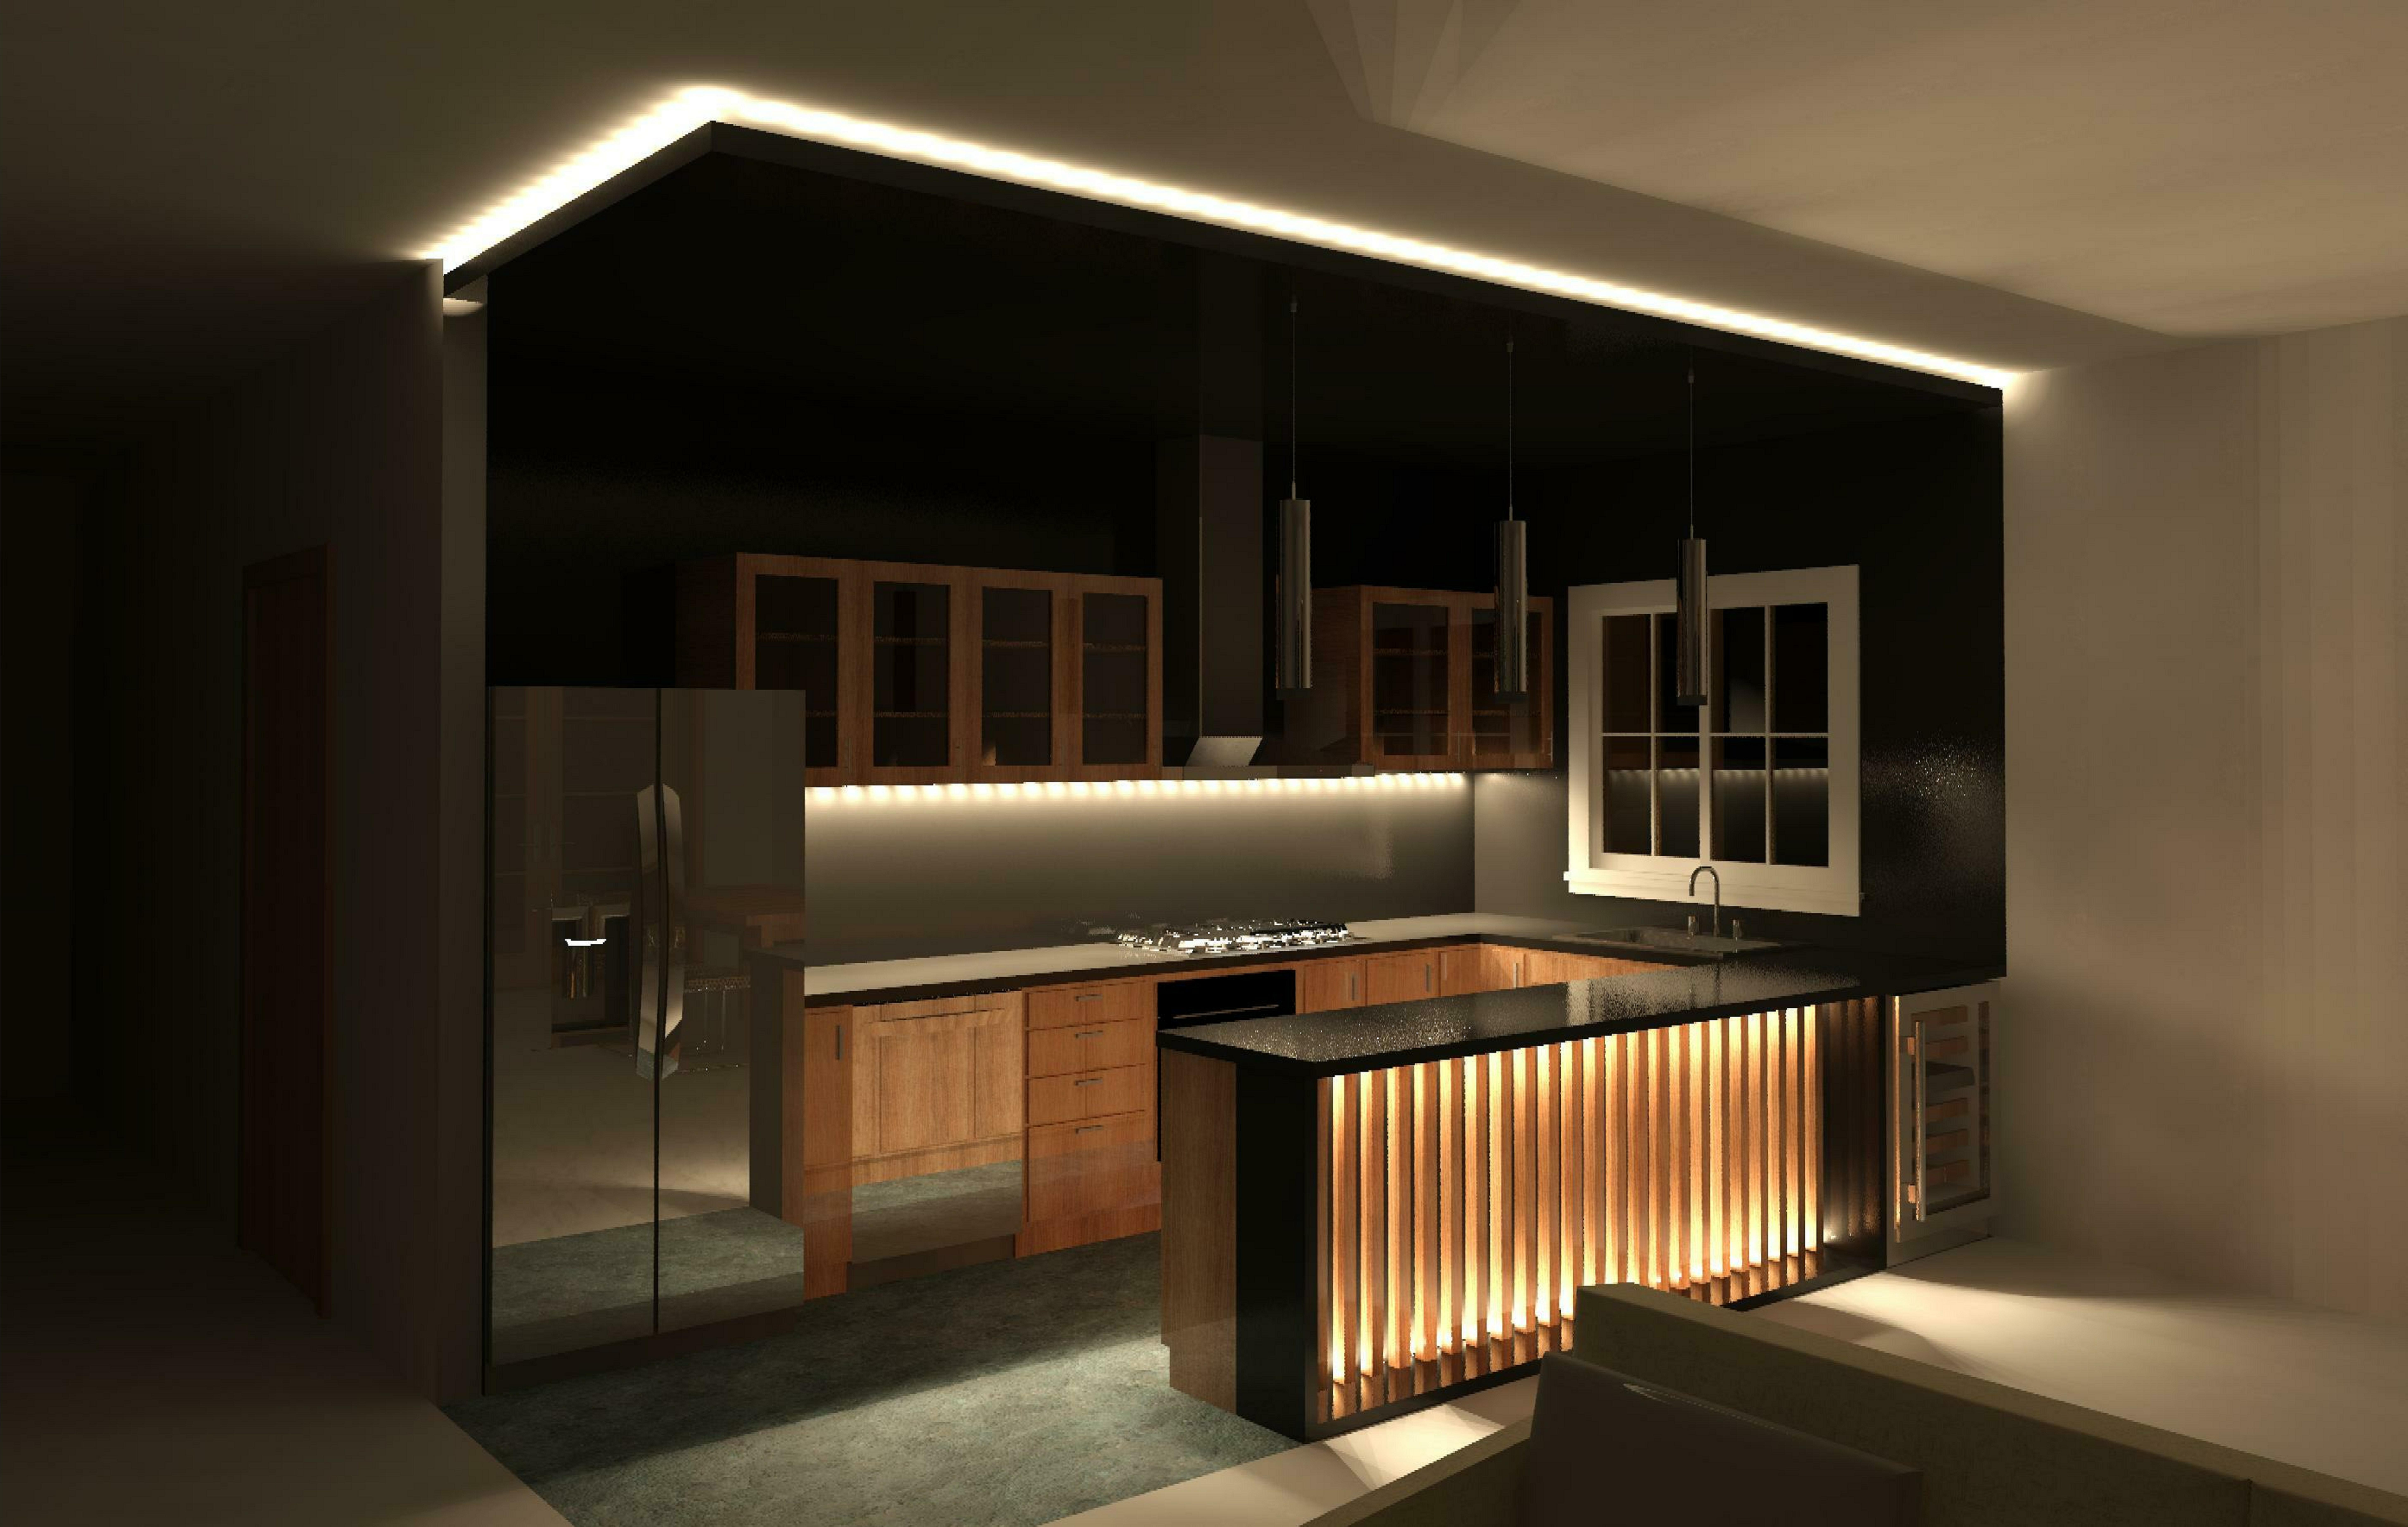 Kitchen Interior Design in Revit Tutorial Balkan Architect